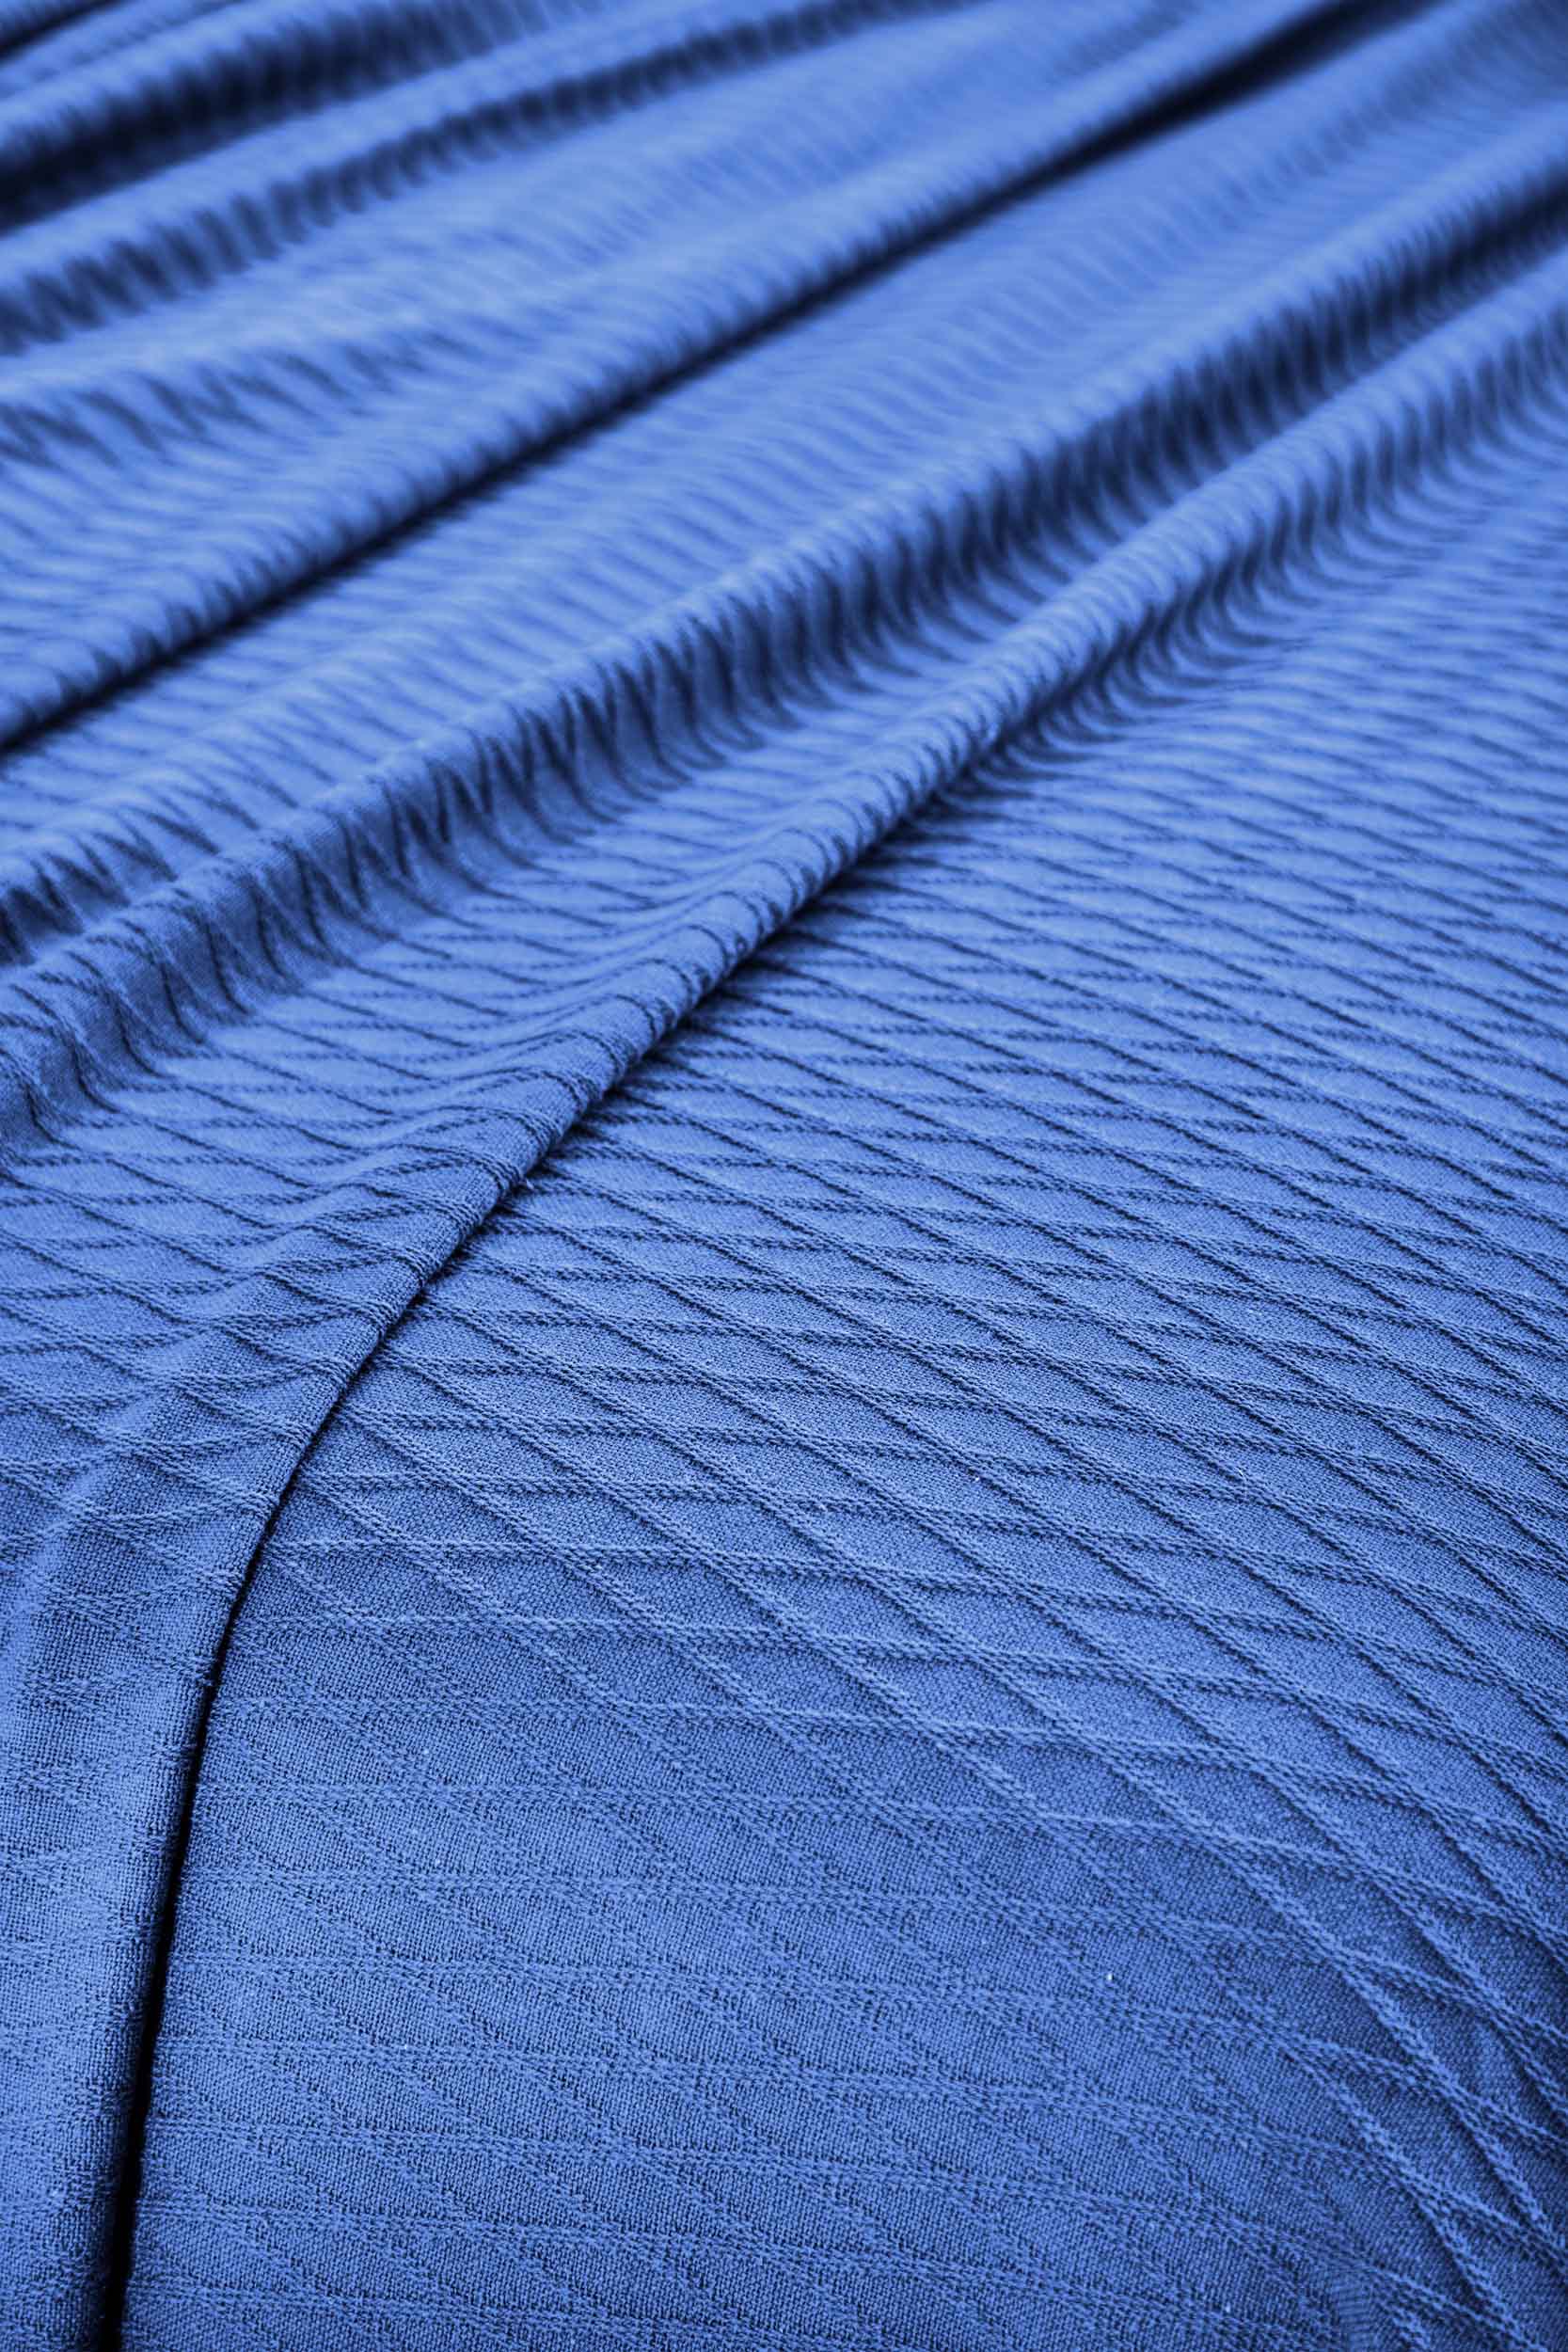 Diamond All-Season Cotton Blanket - Merrit Blue